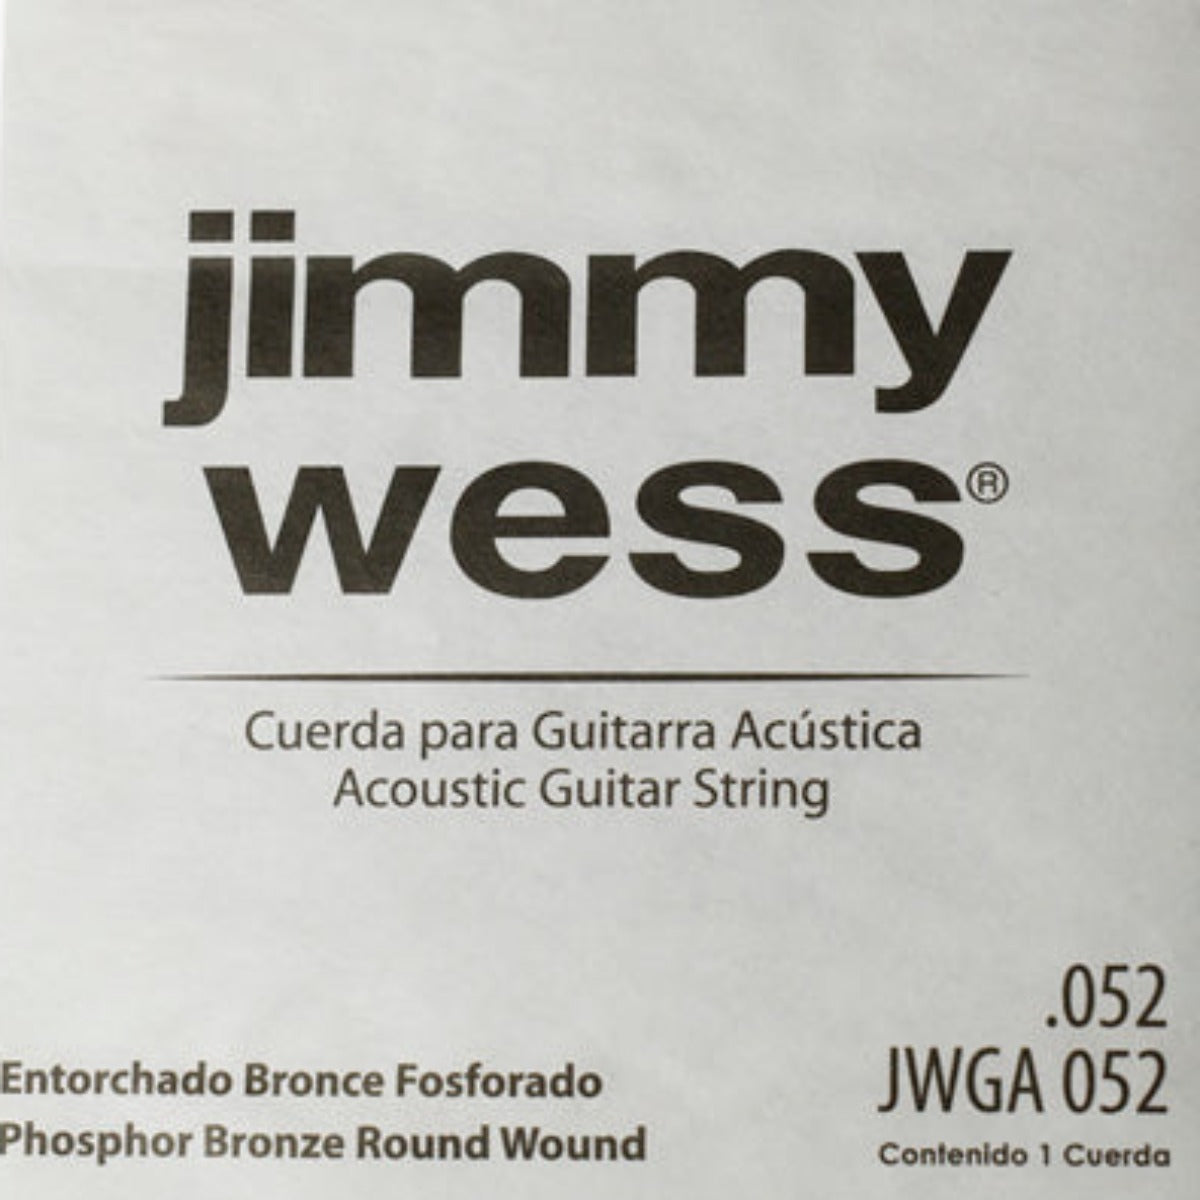 CUERDA P/GUITARRA ELECTROACUSTICA JIMMYWESS 6A 52